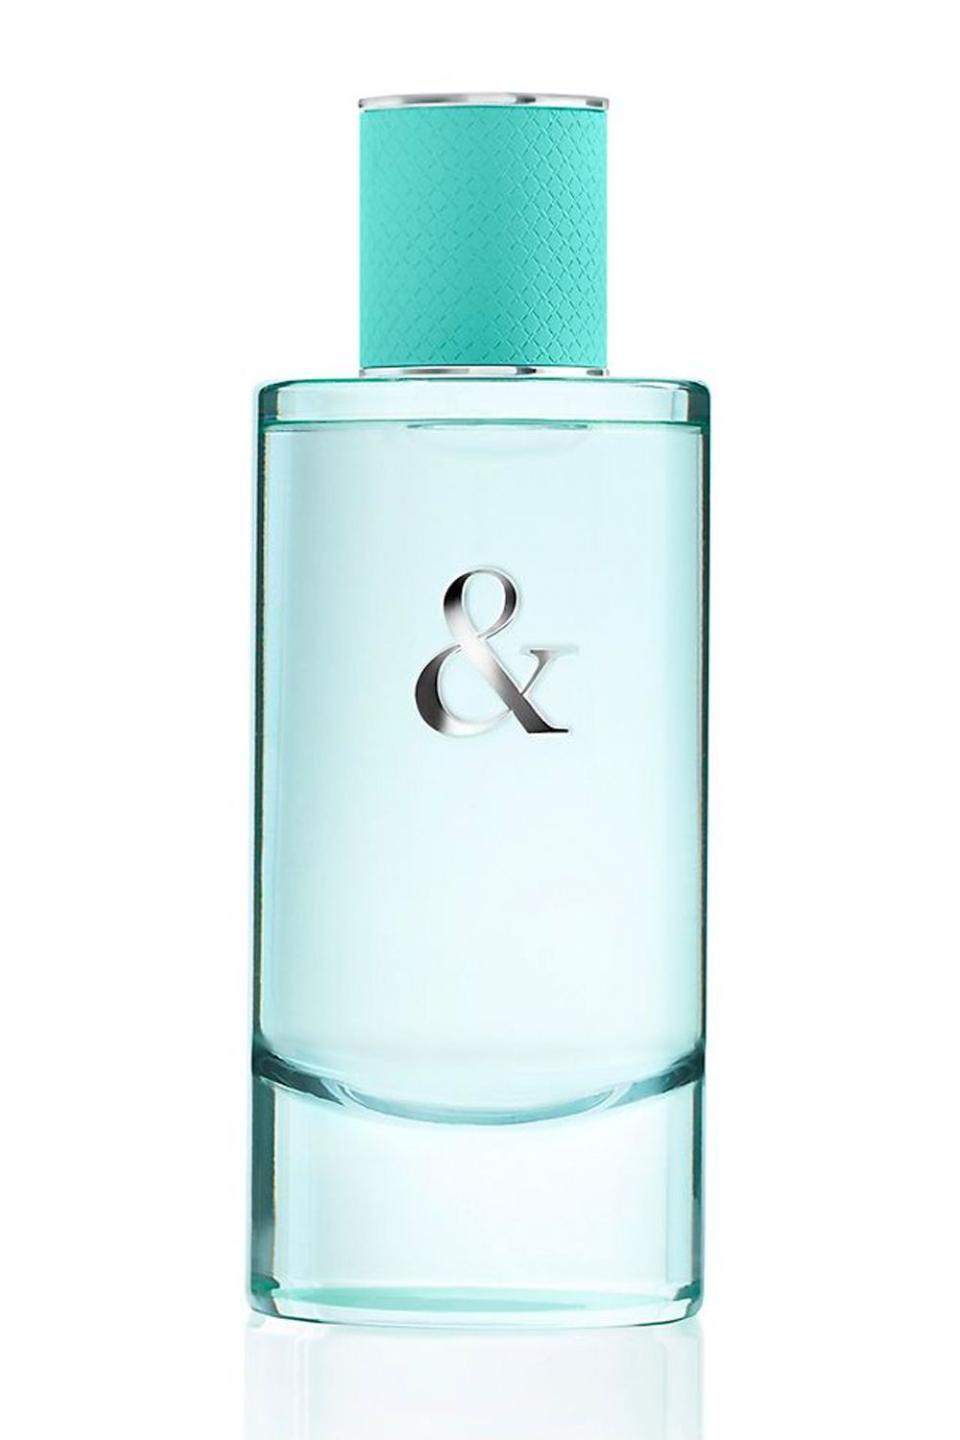 16) Tiffany & Co. Tiffany & Love Eau de Parfum For Her